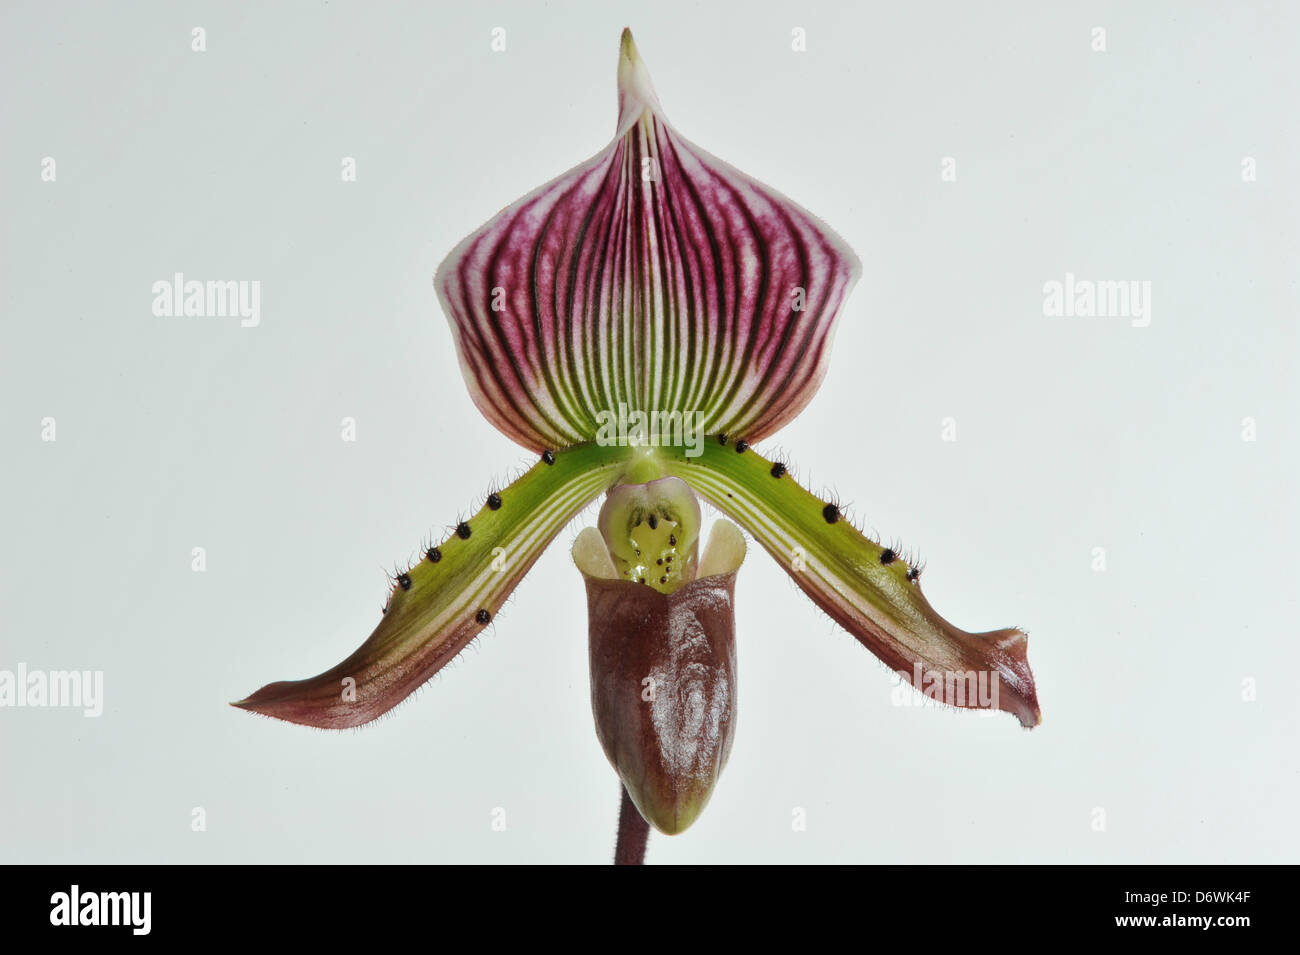 Close-up of a Paphiopedilum Maudiae orchid flower Stock Photo